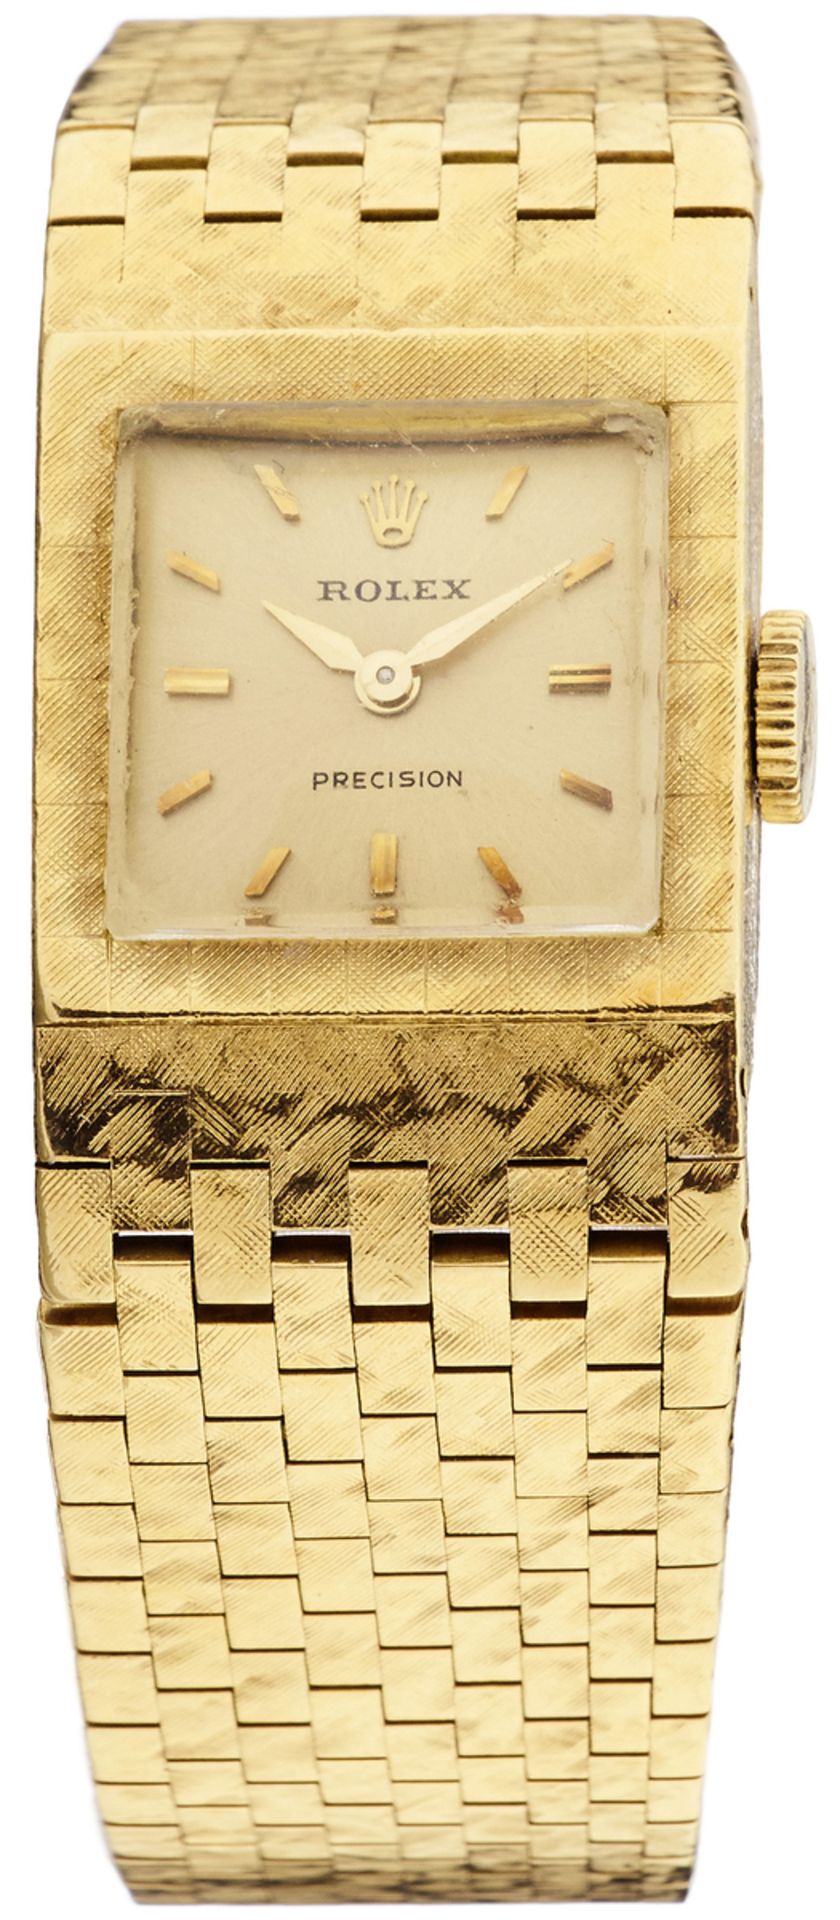 Damenarmbanduhr "Rolex"Um 1960. Rolex Précision. Quadratisches Gehäuse und originales Armband aus